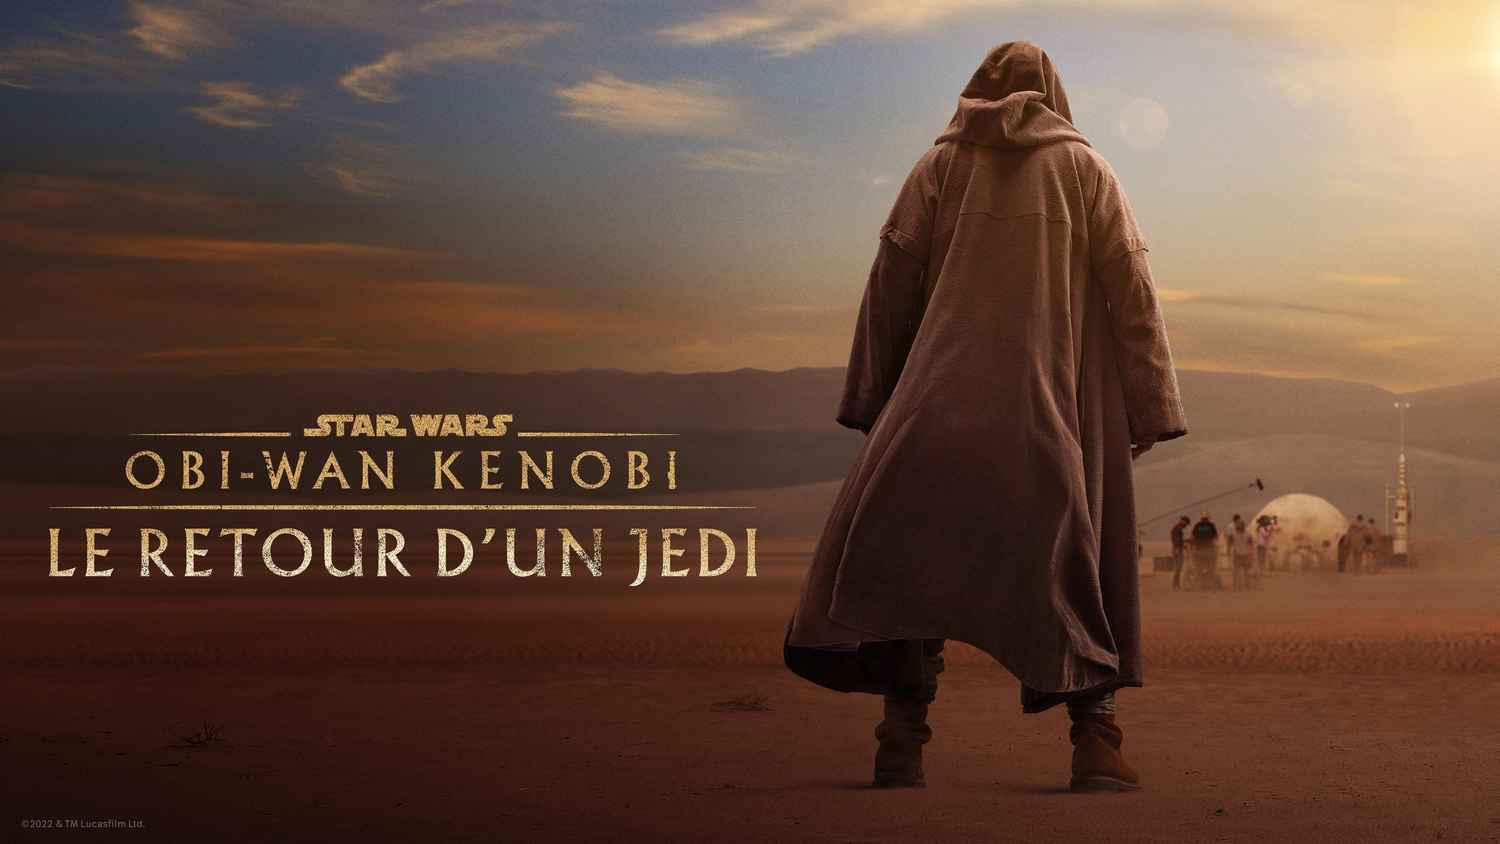 Obi-Wan Kenobi: The Jedi's Return